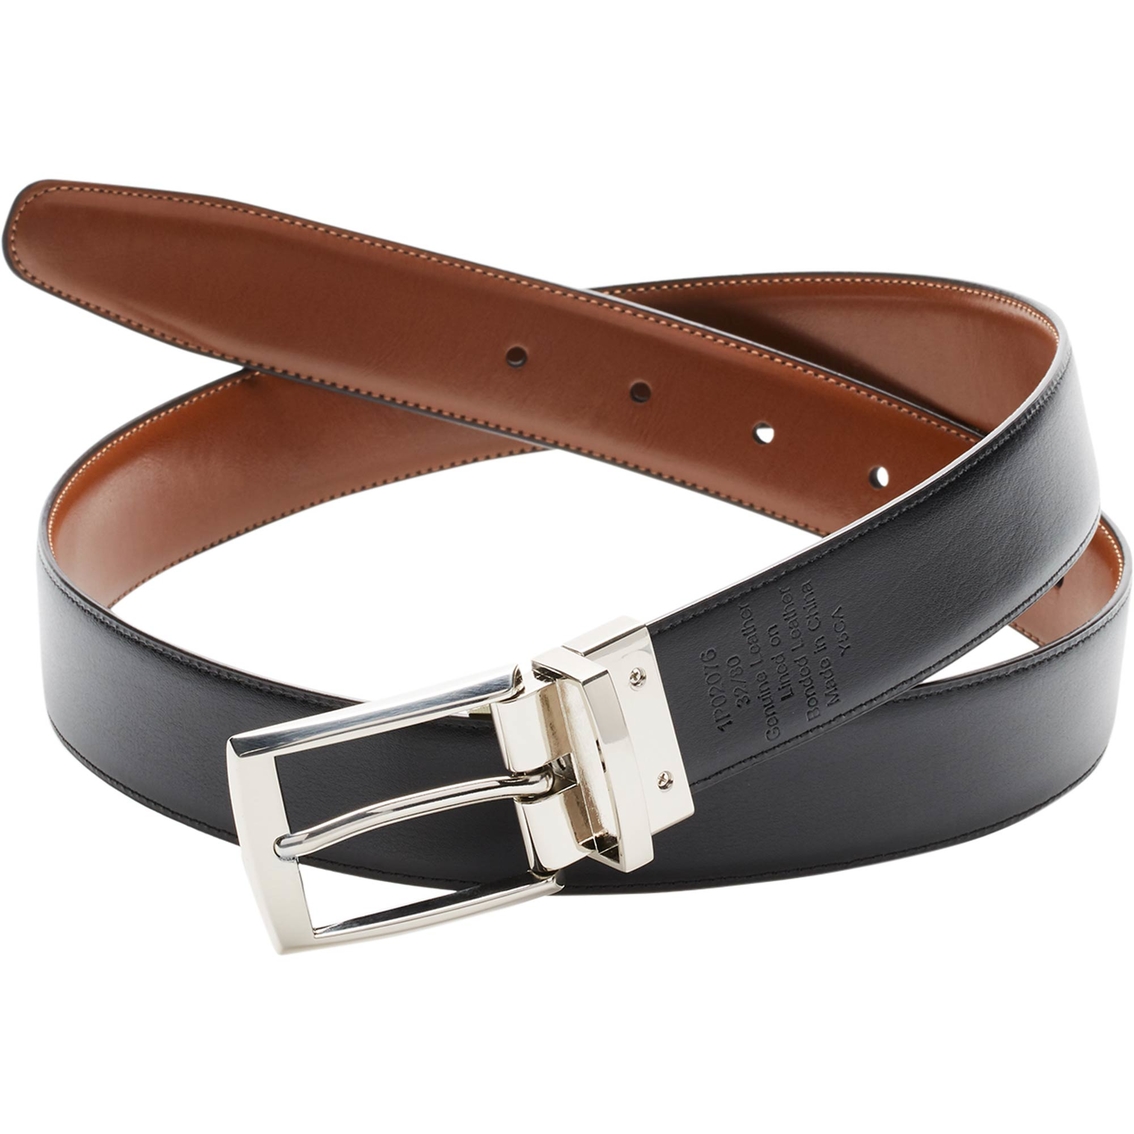 Perry Ellis Reversible Amigo Tan Leather Belt - Image 2 of 4